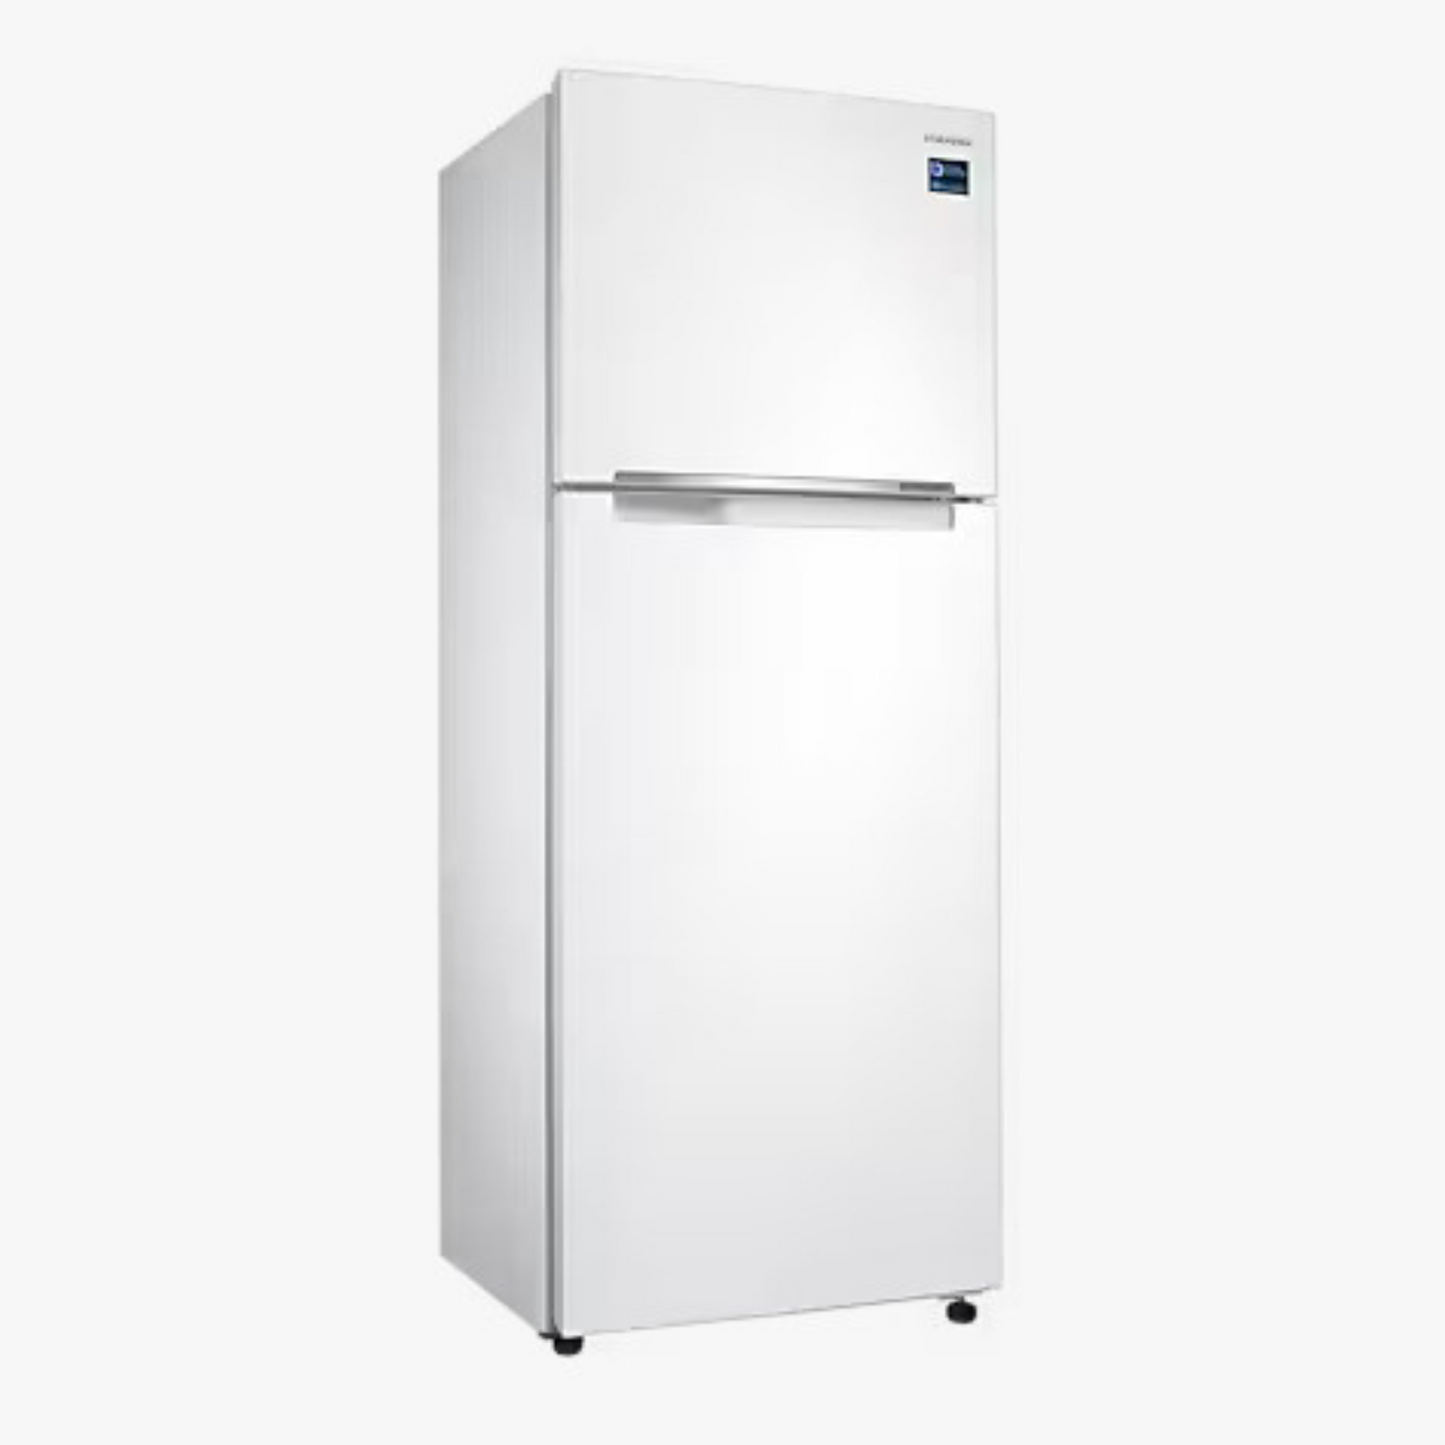 Samsung 450L Refrigerator, RT4K5000WW